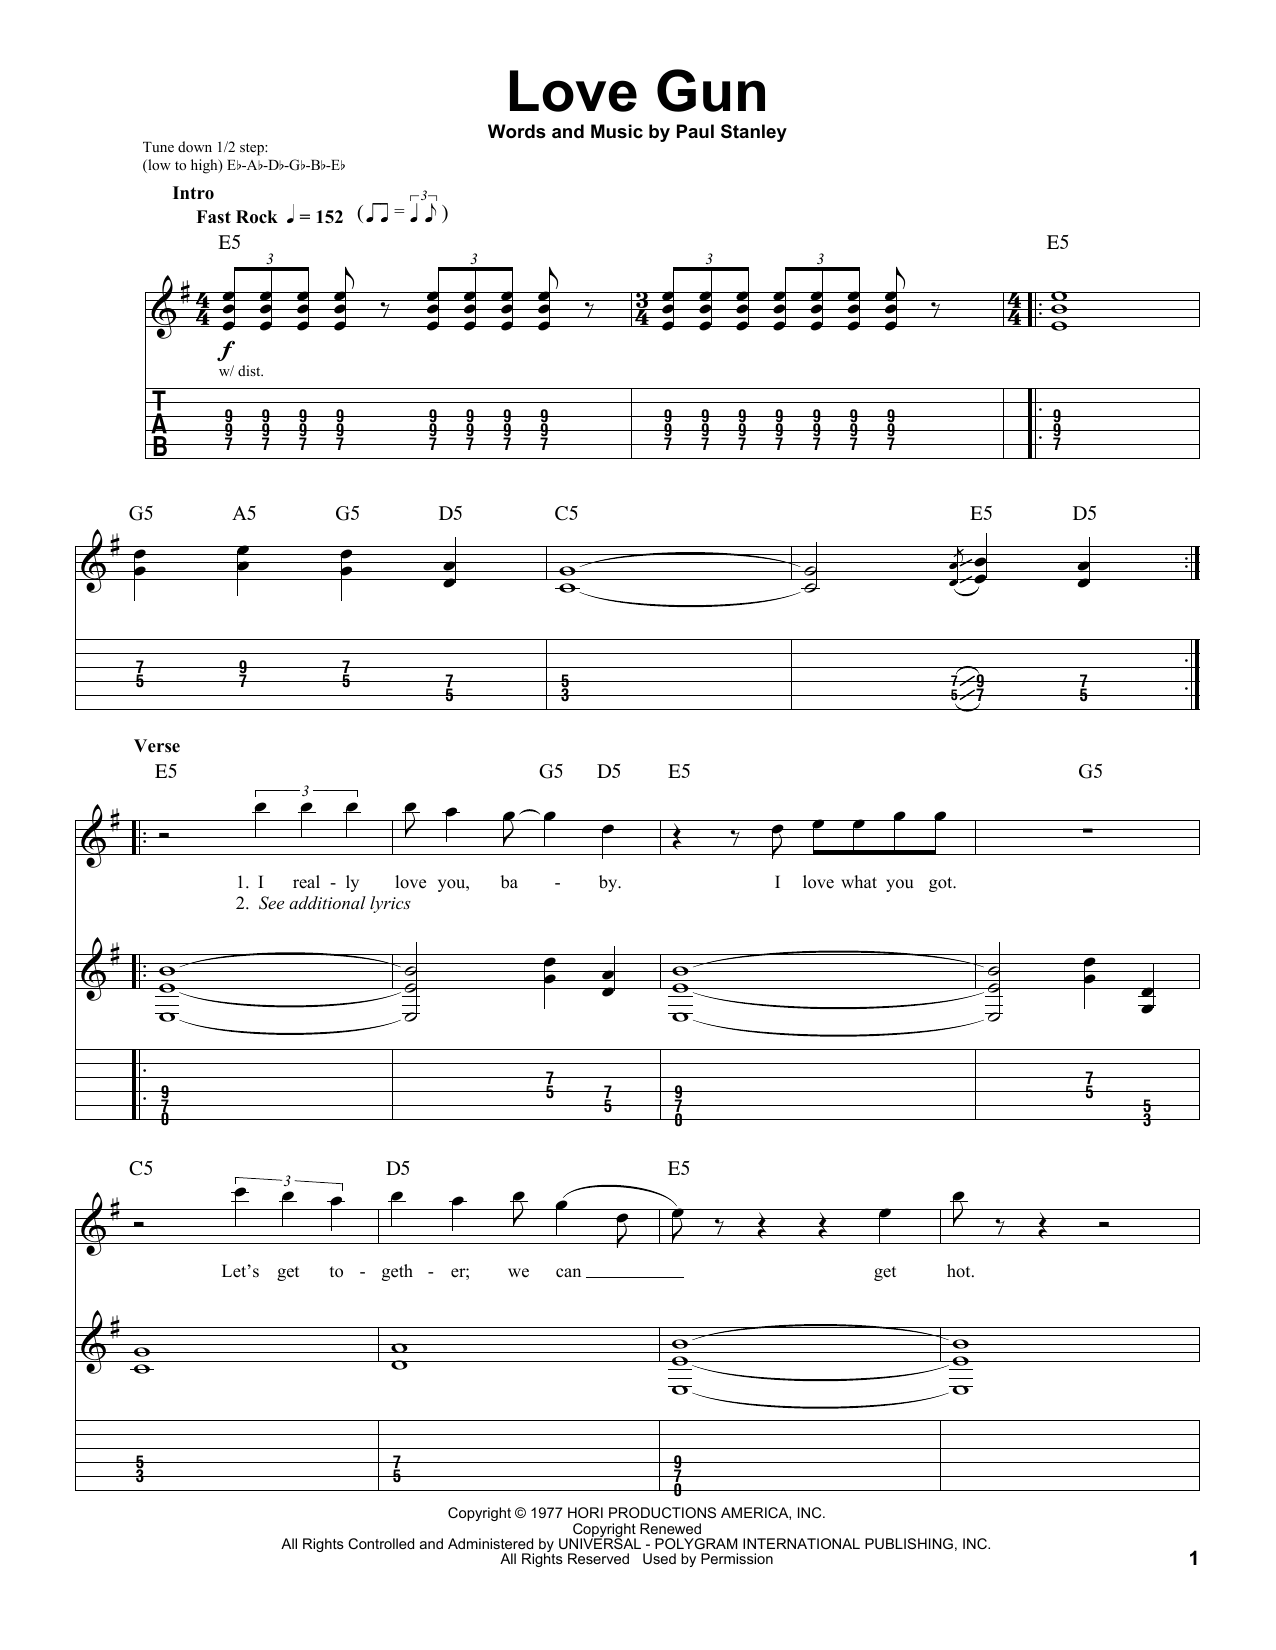 KISS Love Gun Sheet Music Notes & Chords for Guitar Tab - Download or Print PDF